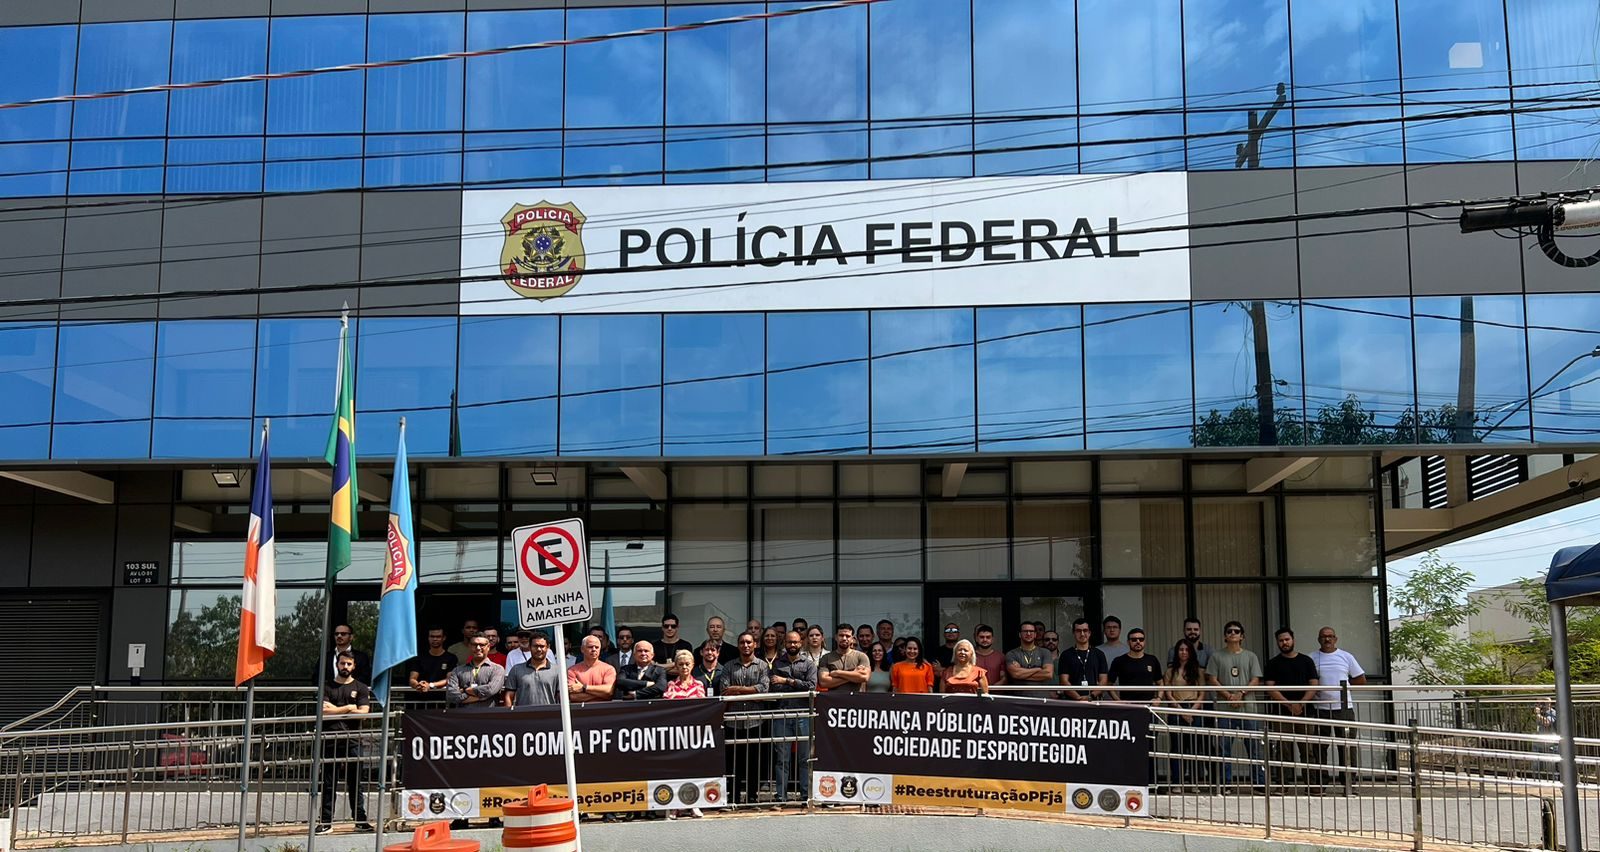 Polícia Federal do TO protesta contra defasagem salarial